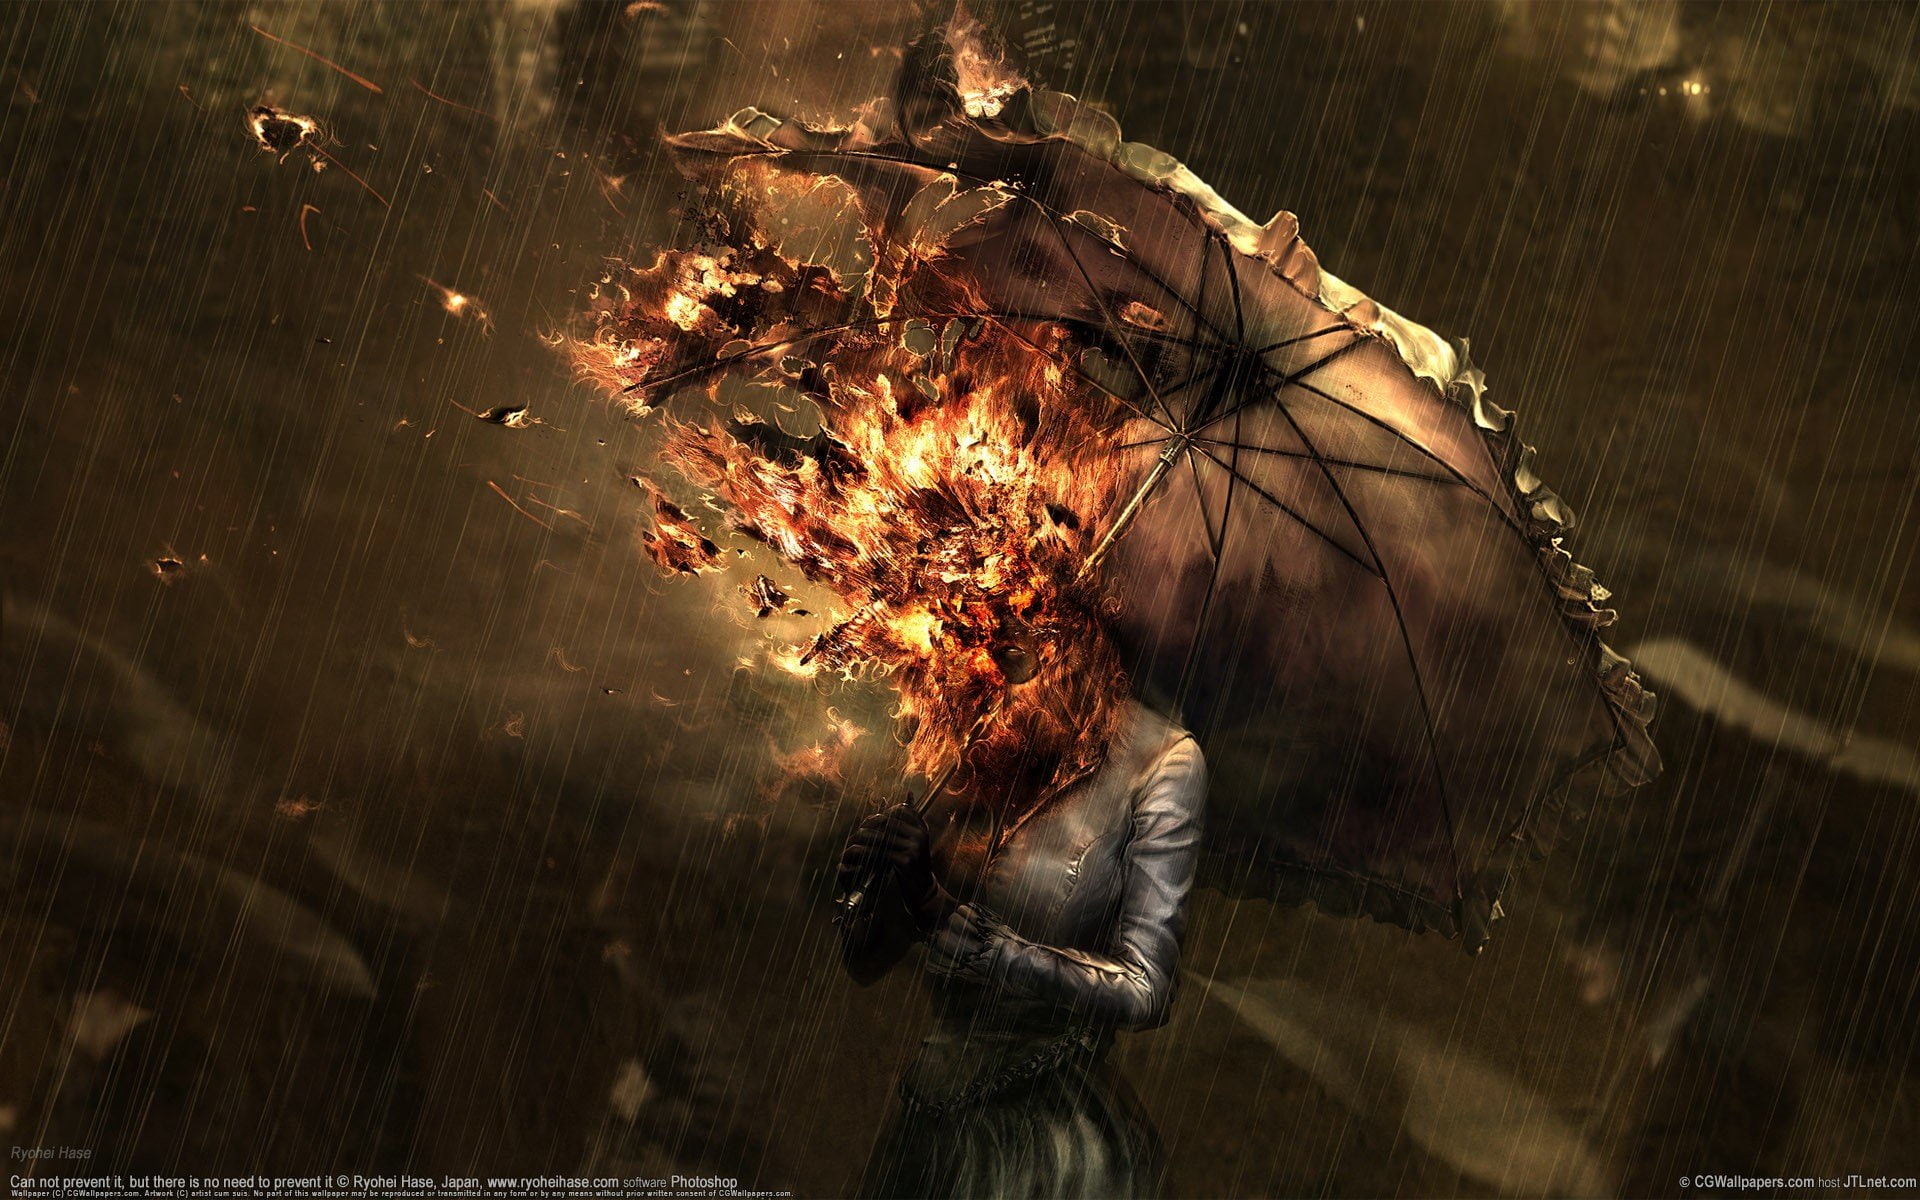 Spontaneous combustion, umbrella